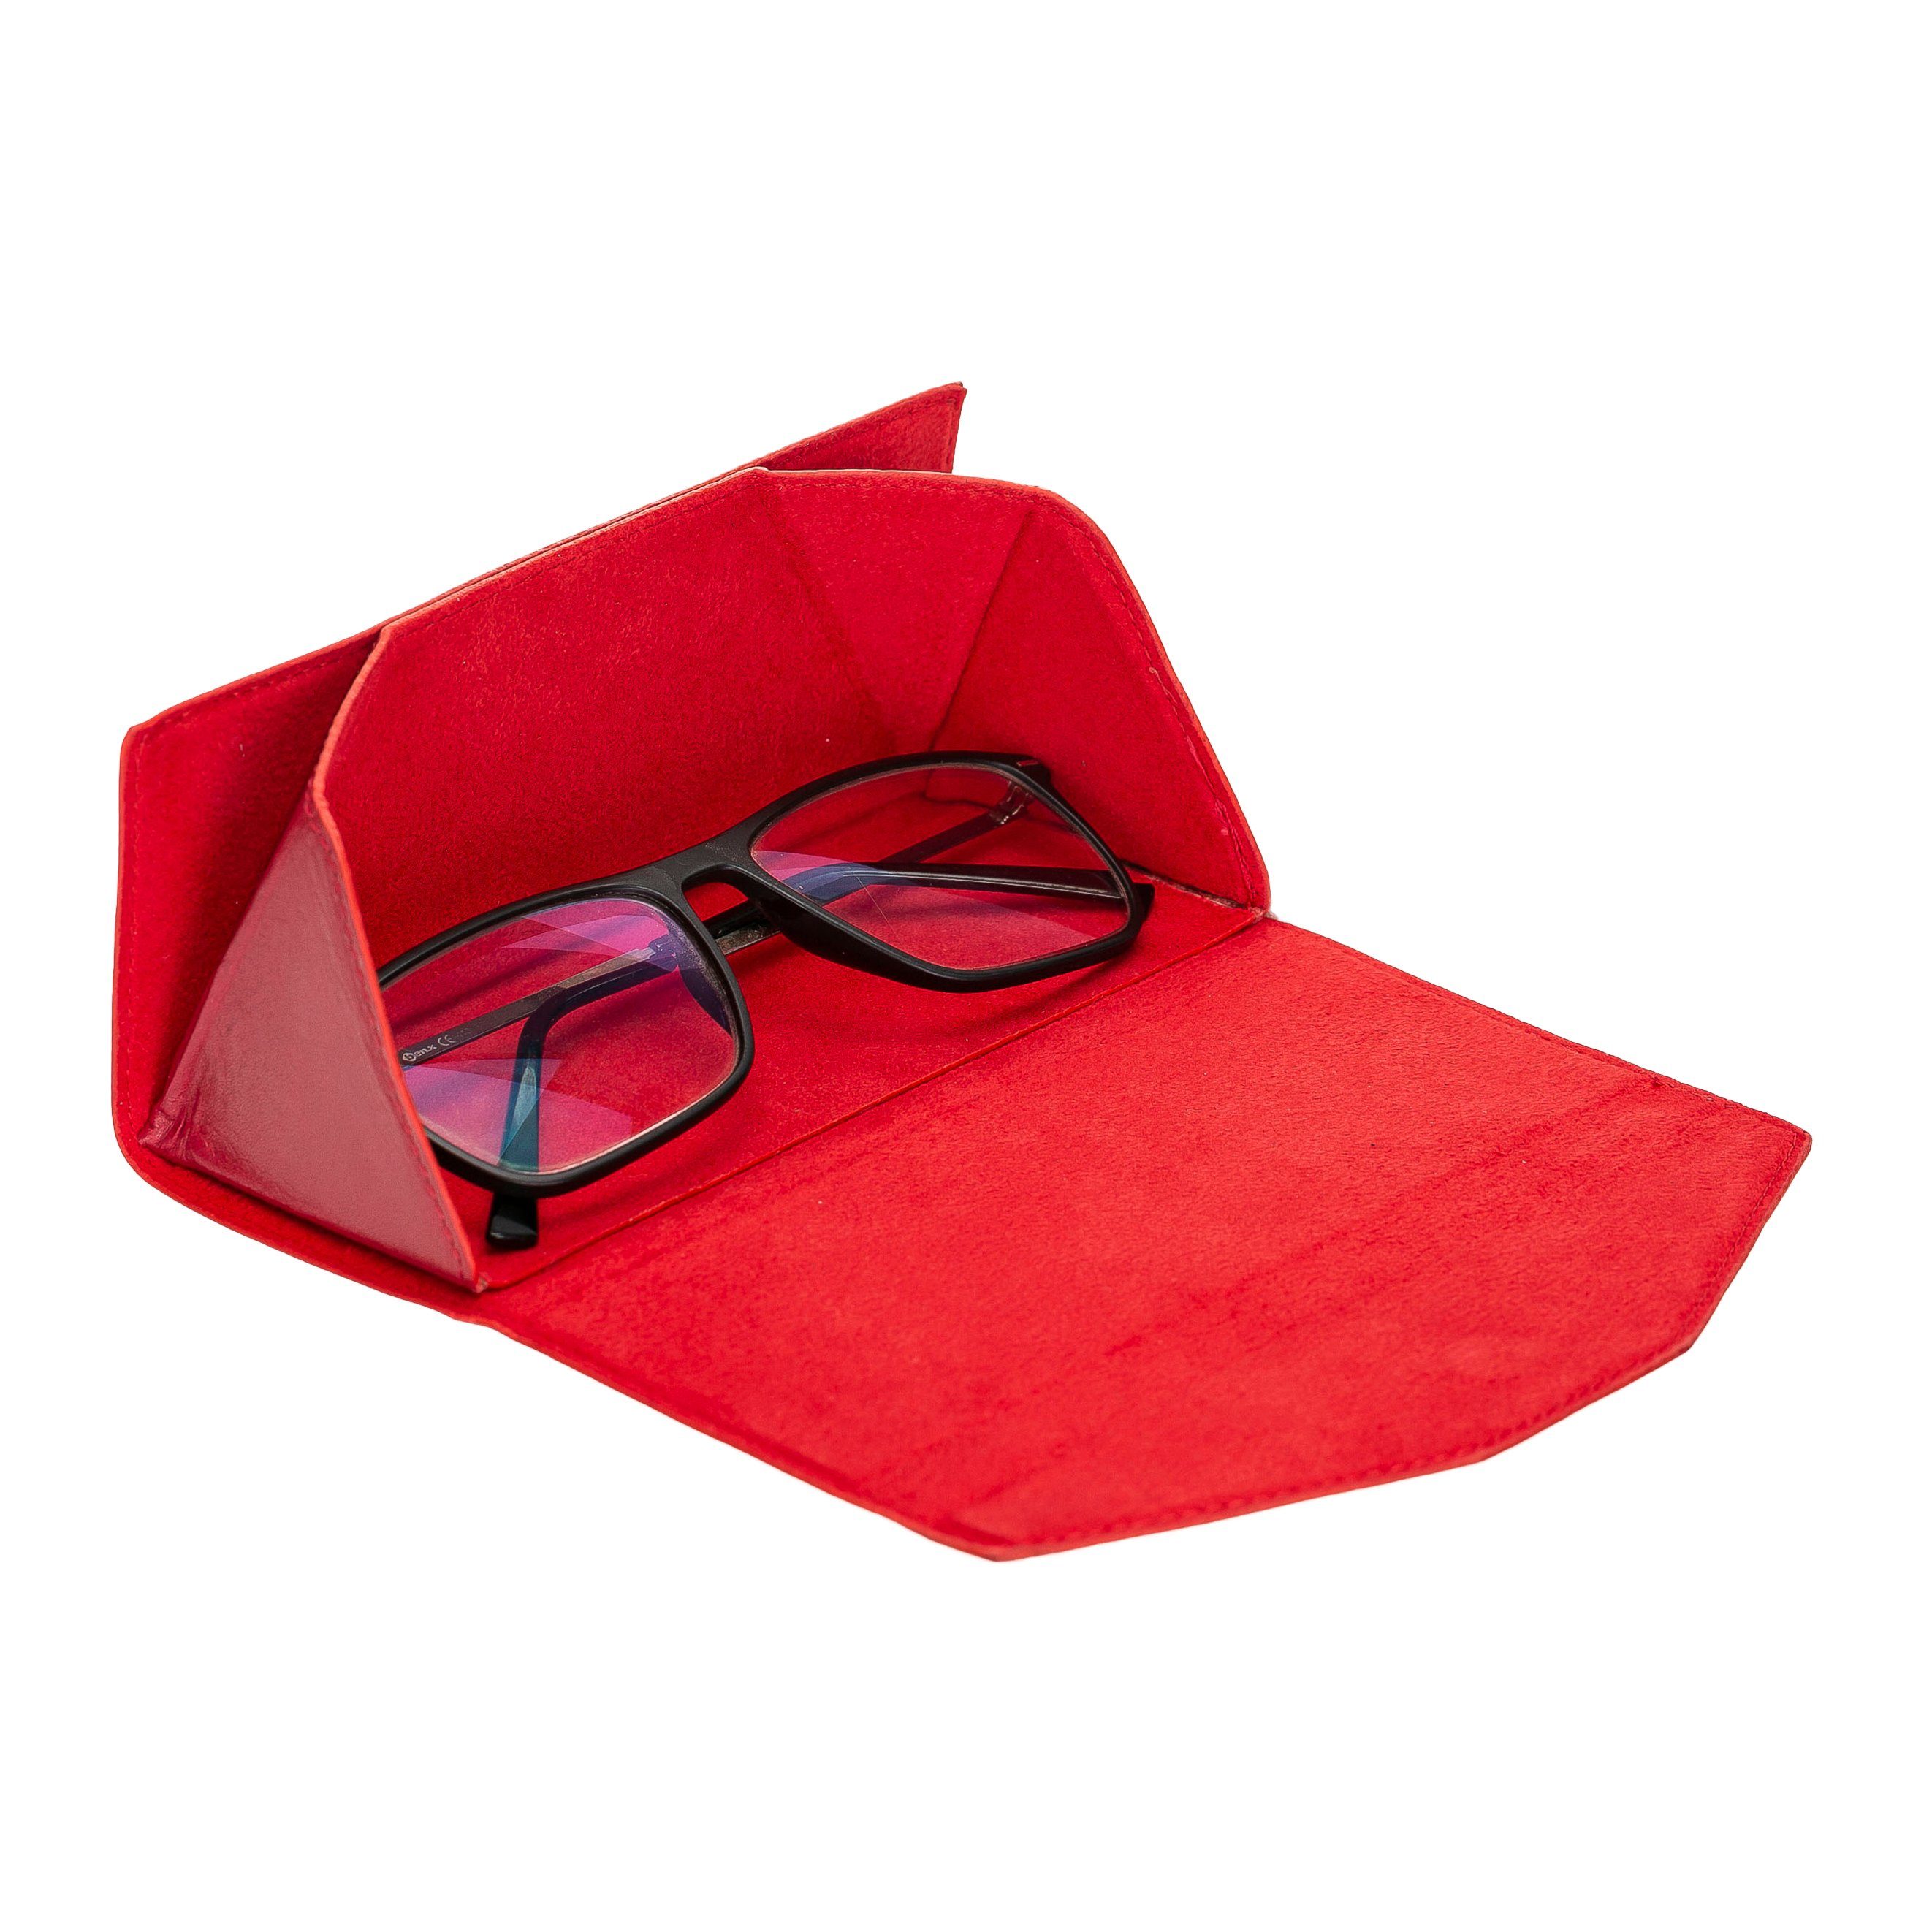 Solo Pelle Brillenetui Faltbares Brillenetui aus echtem Leder, tragbare Brillenbox zum falten Rot